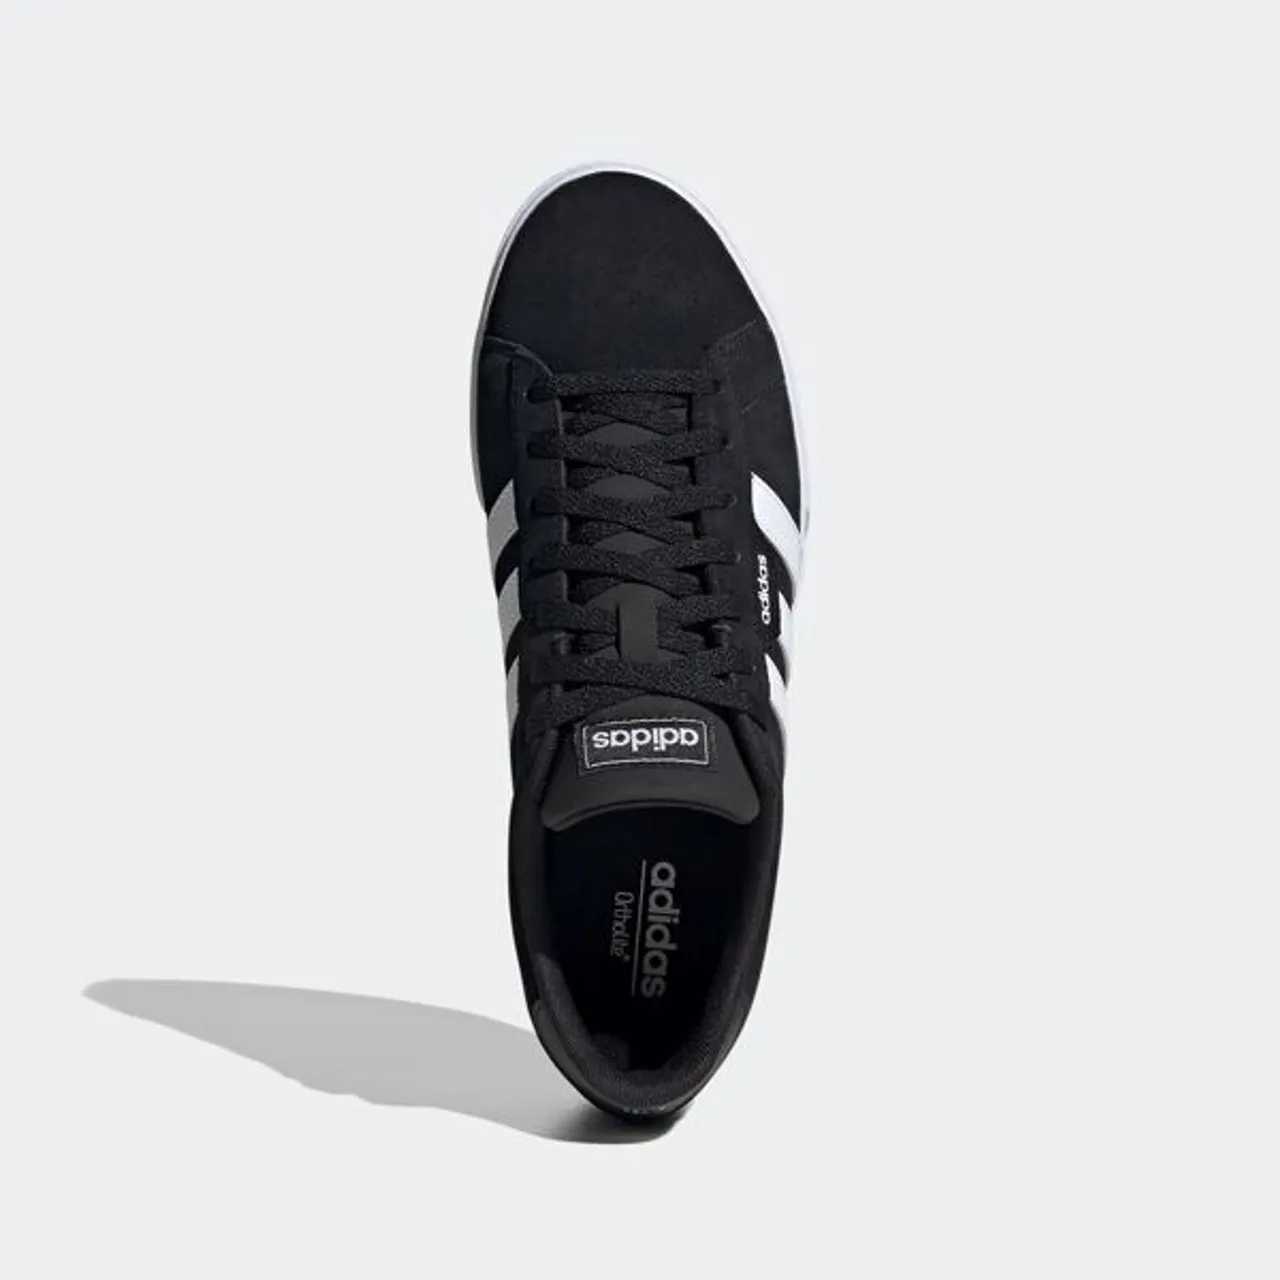 Sneaker ADIDAS SPORTSWEAR "DAILY 3.0" Gr. 43, schwarz-weiß (core black, cloud white, core black) Schuhe Schnürhalbschuhe